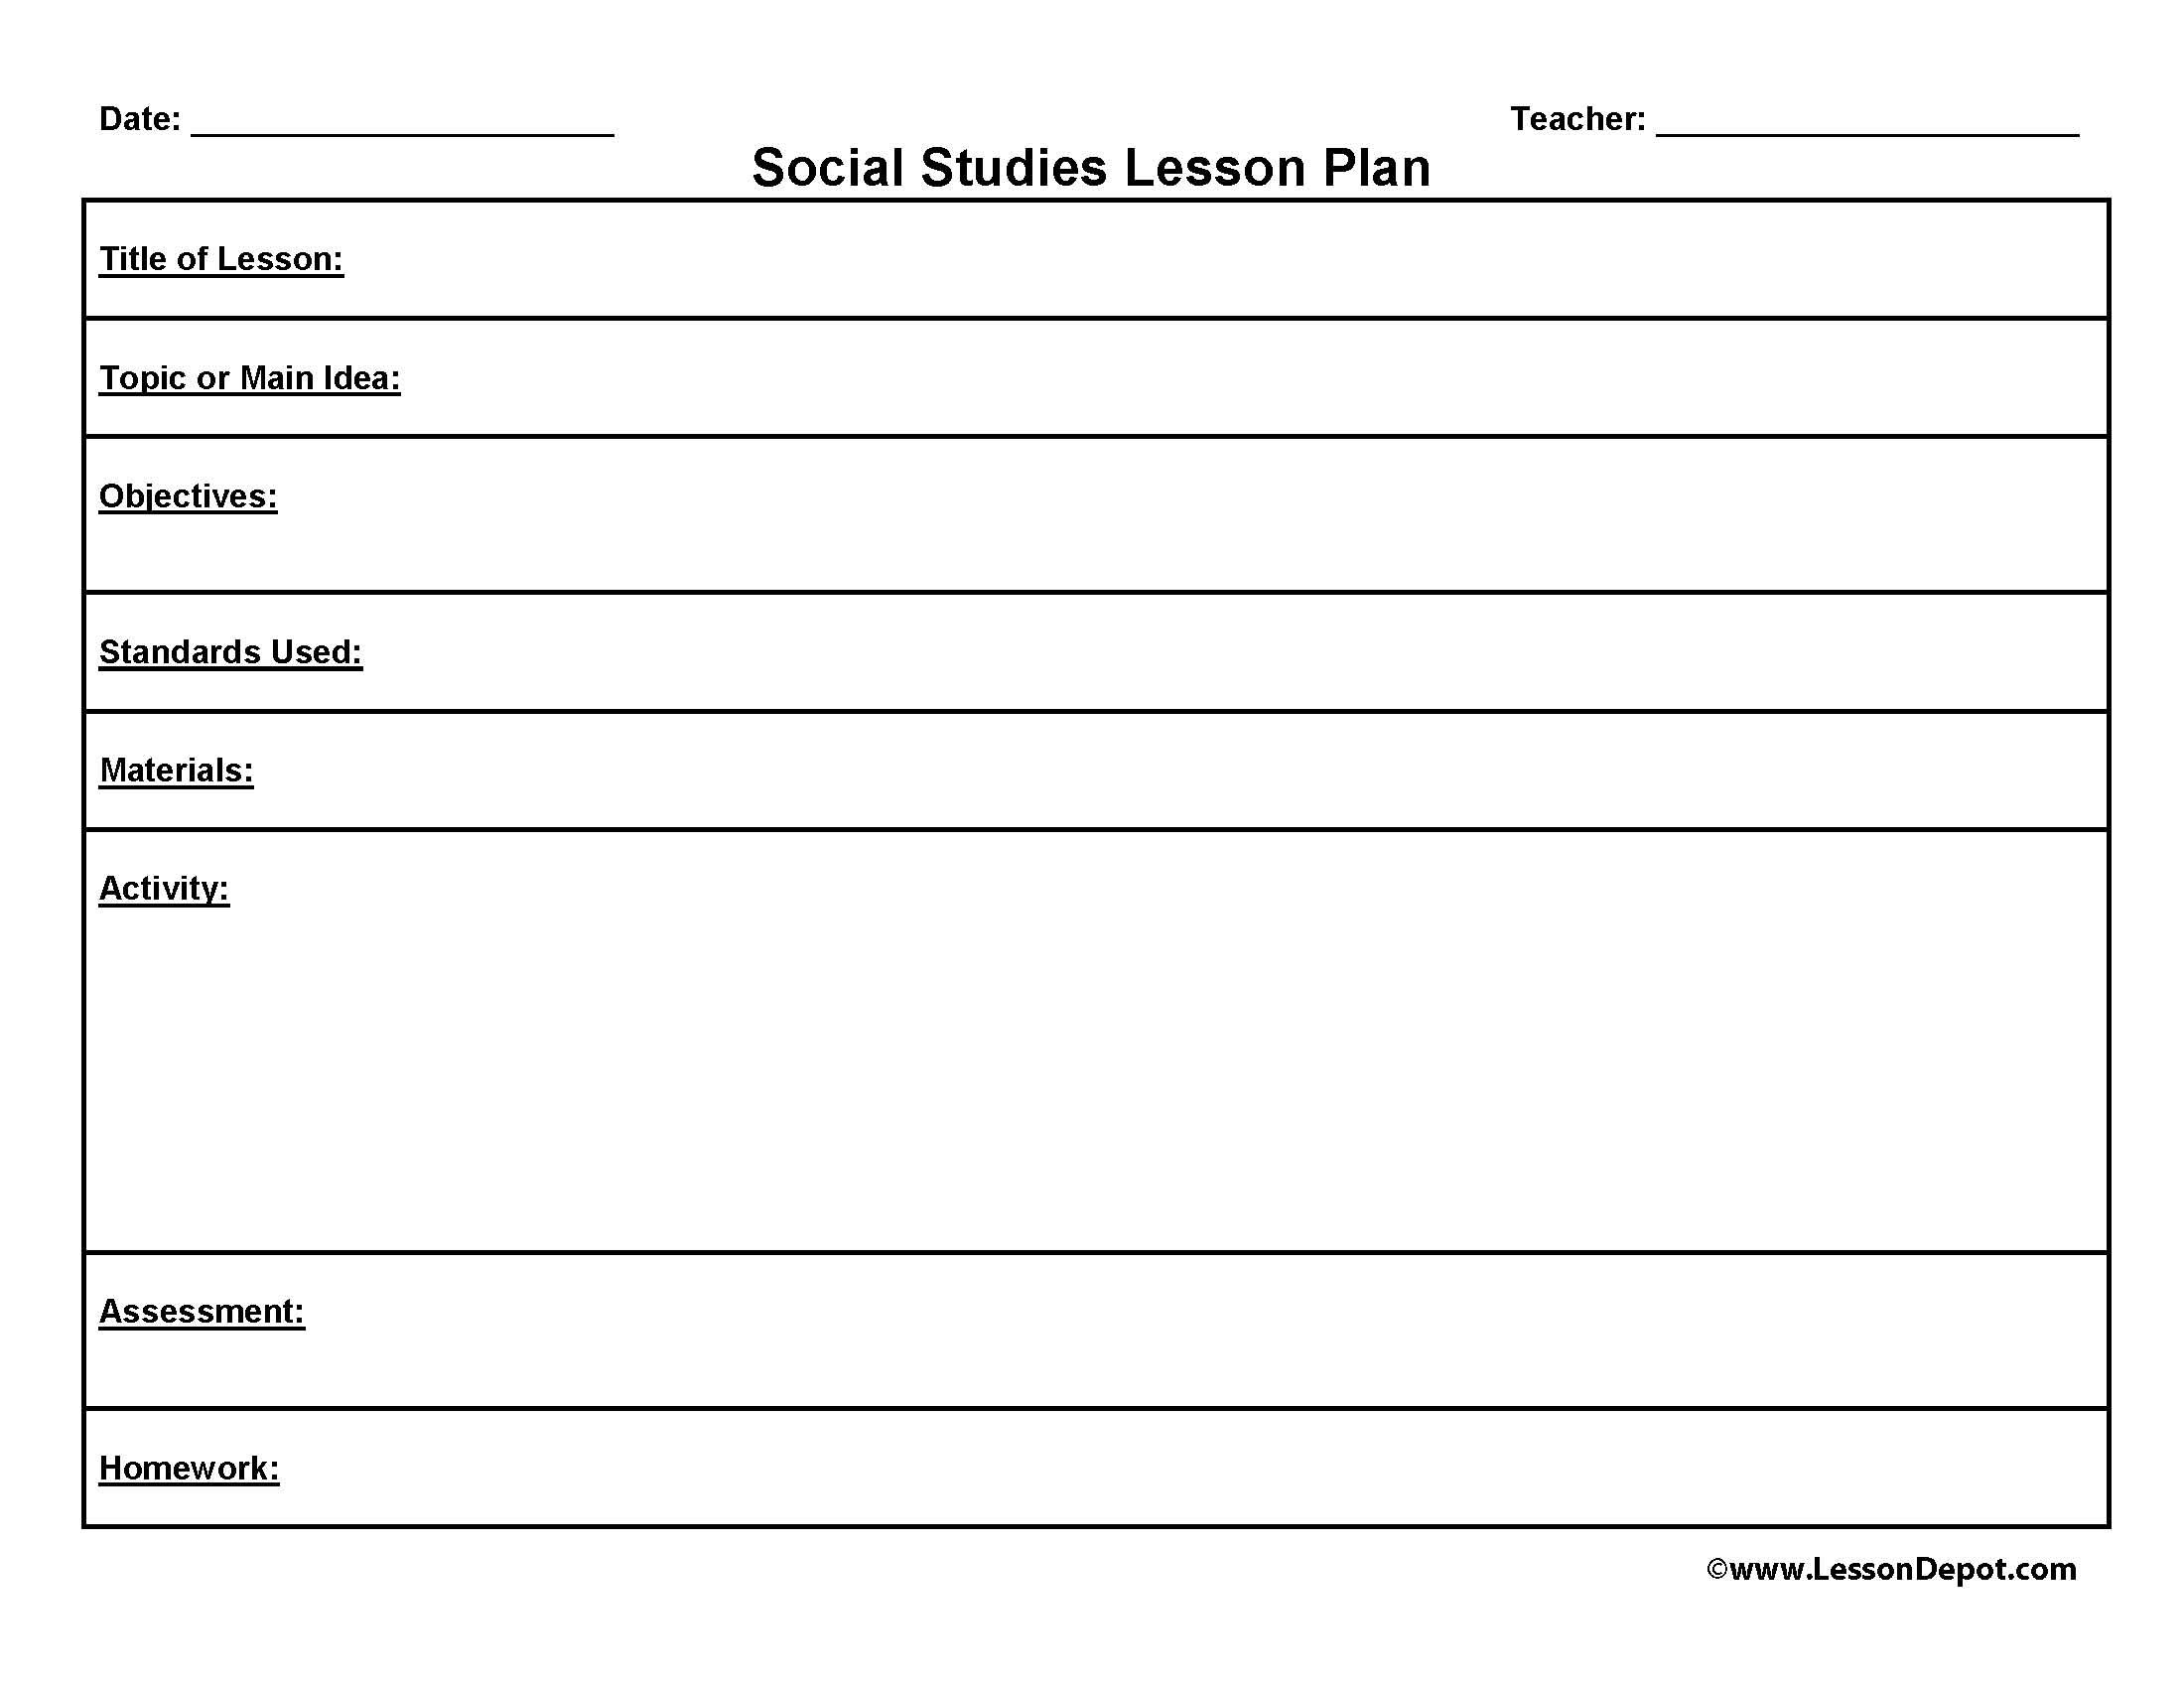 Free Lesson Plan Forms | Social Studies Lesson Plan Template